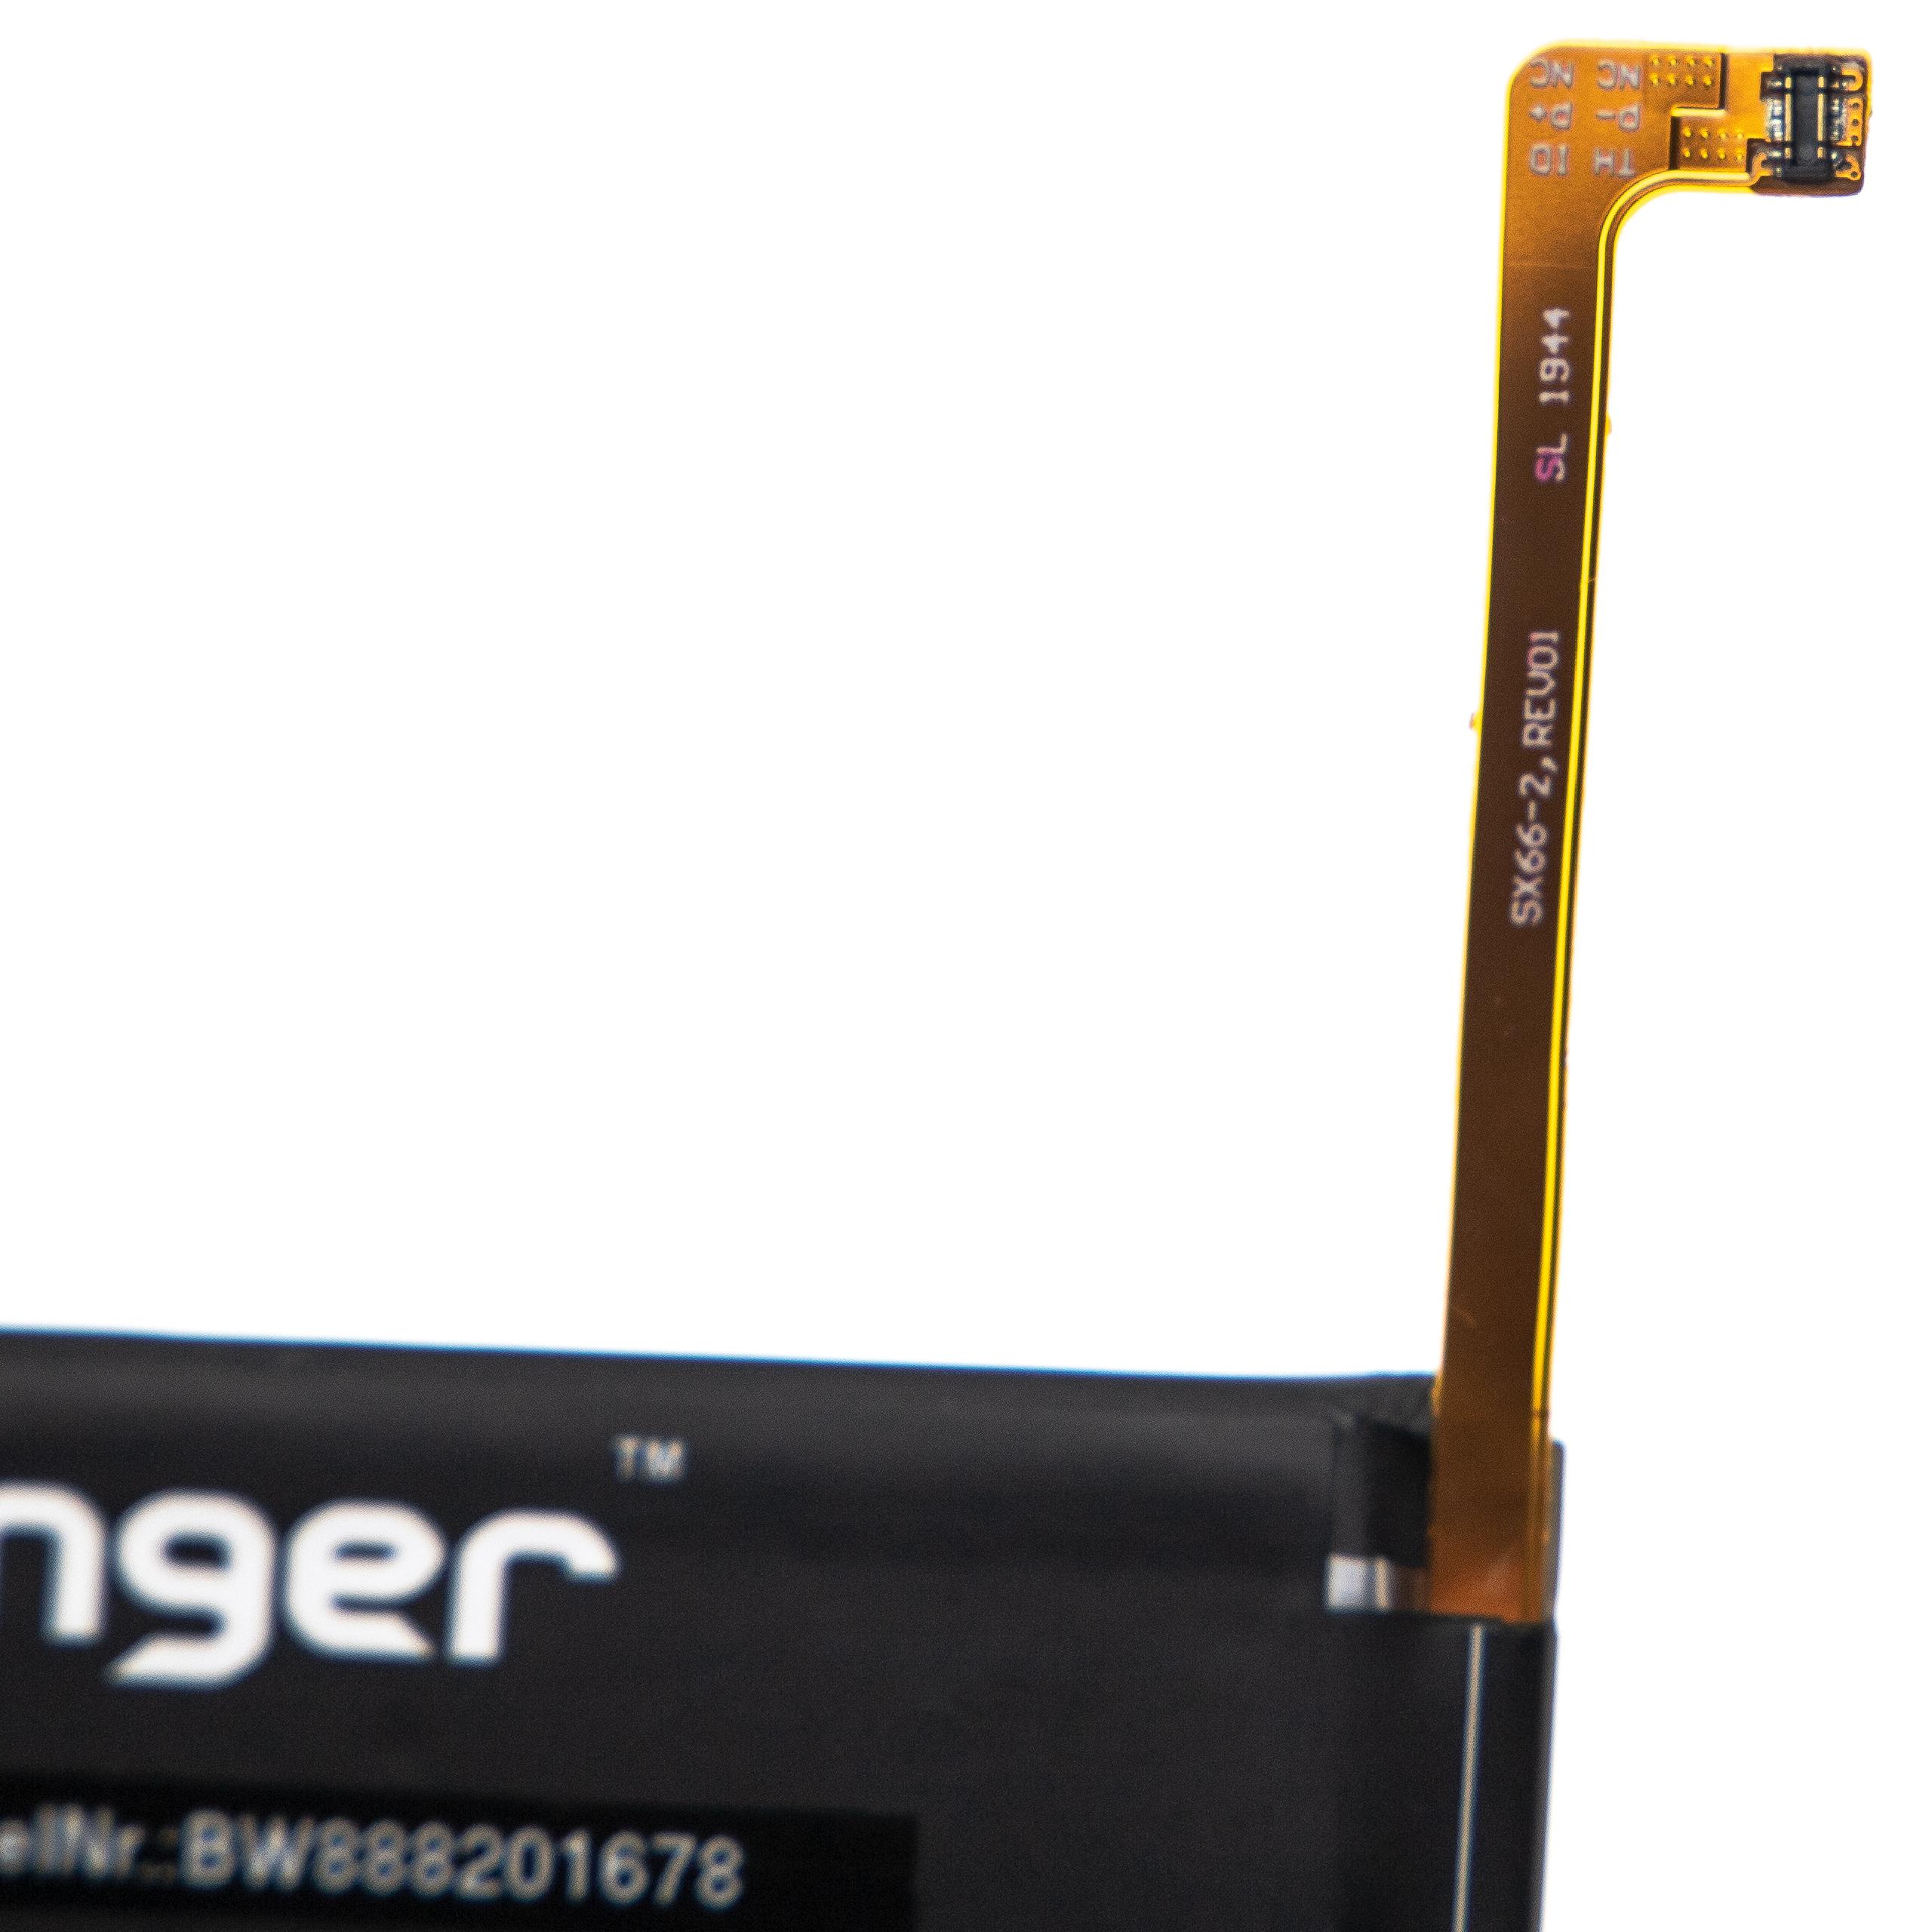 Batteria sostituisce Samsung GH81-18734A, HQ-S71 per cellulare Samsung - 4900mAh 3,85V Li-Poly